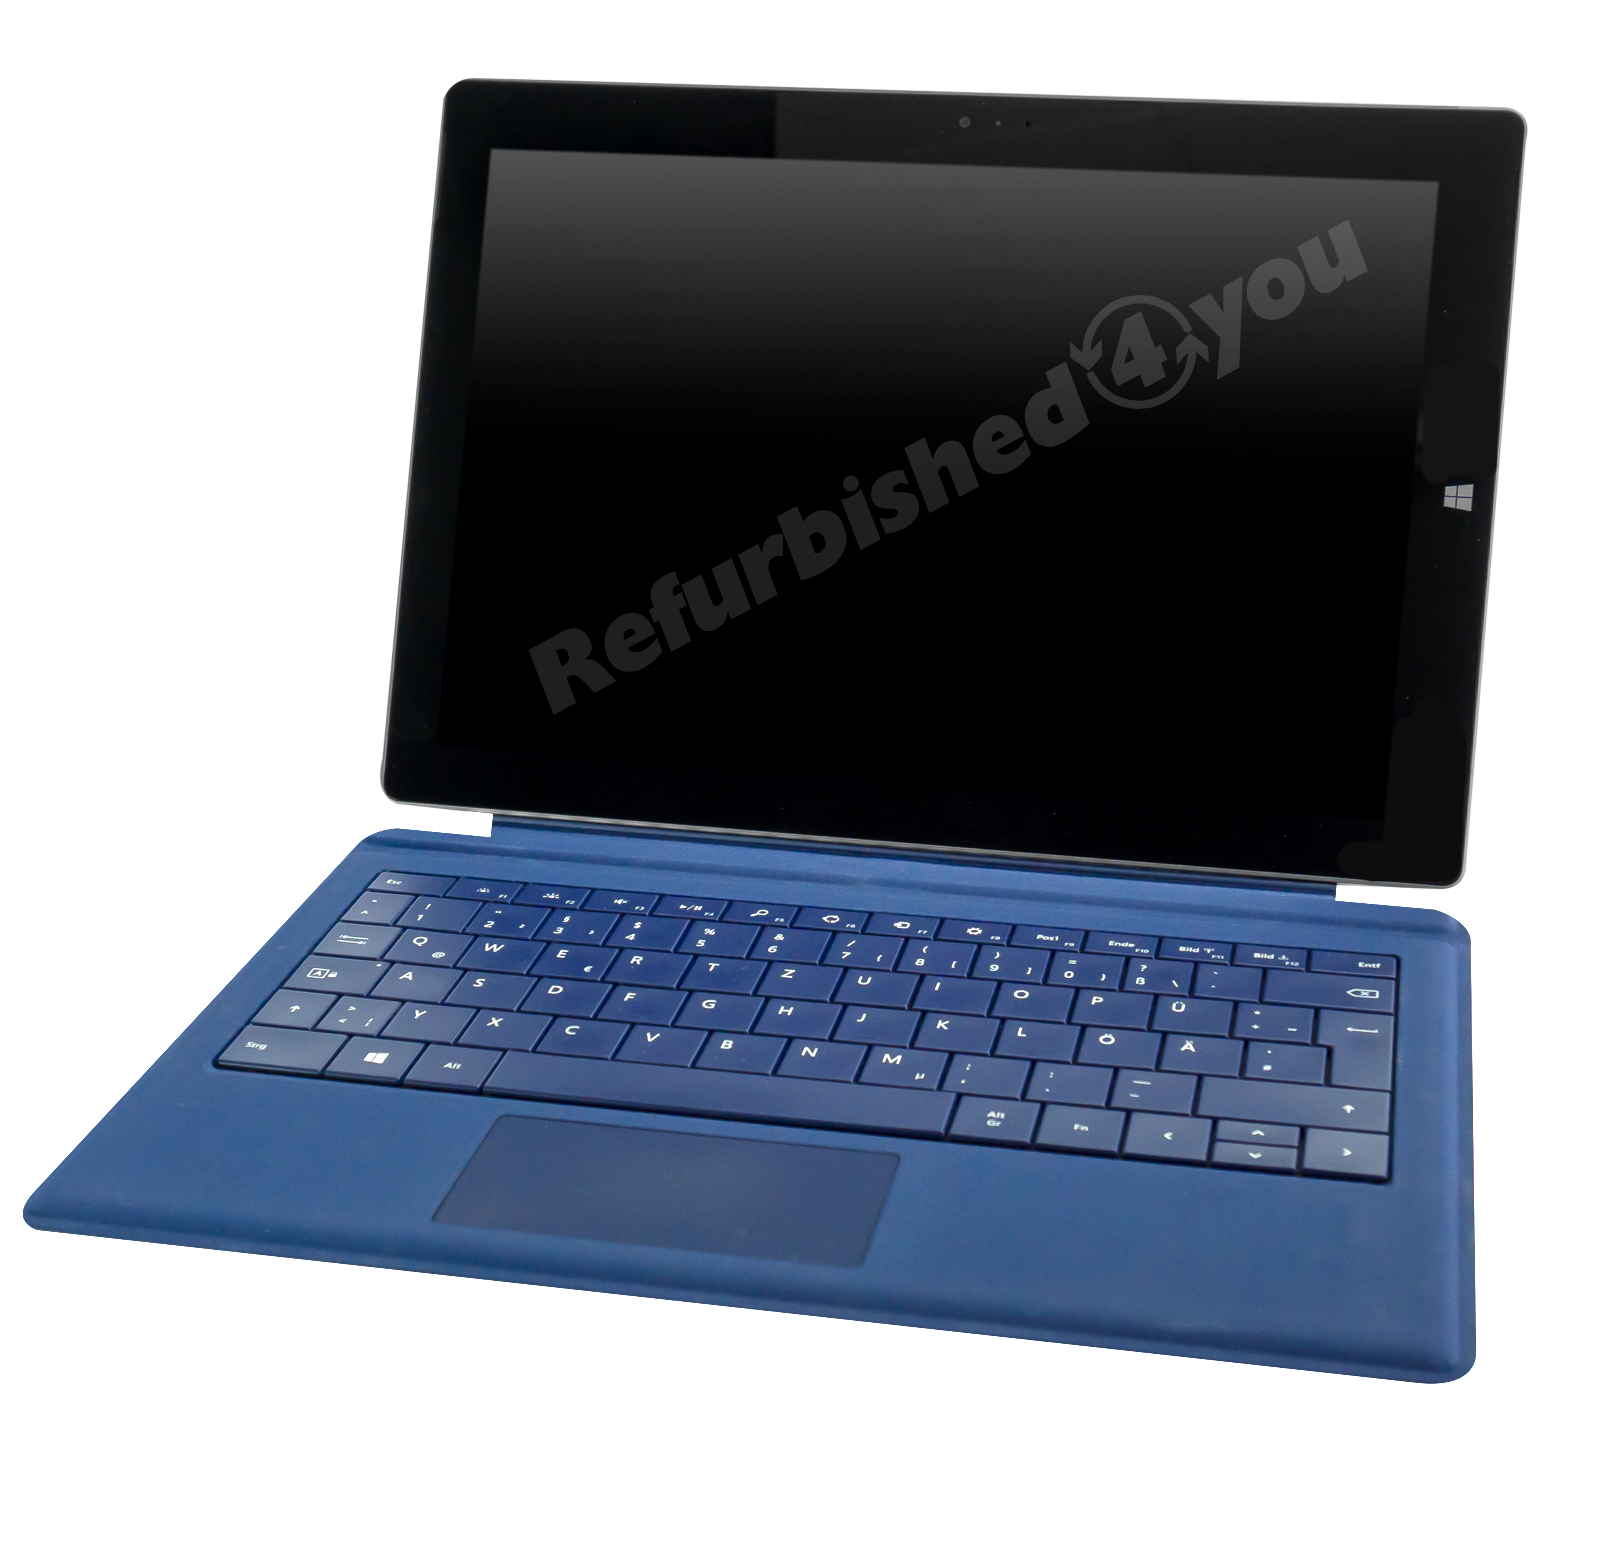 Microsoft Surface Pro 3 (1631) i5-4300U 1.9GHz 4GB 128GB SSD Win10Pro